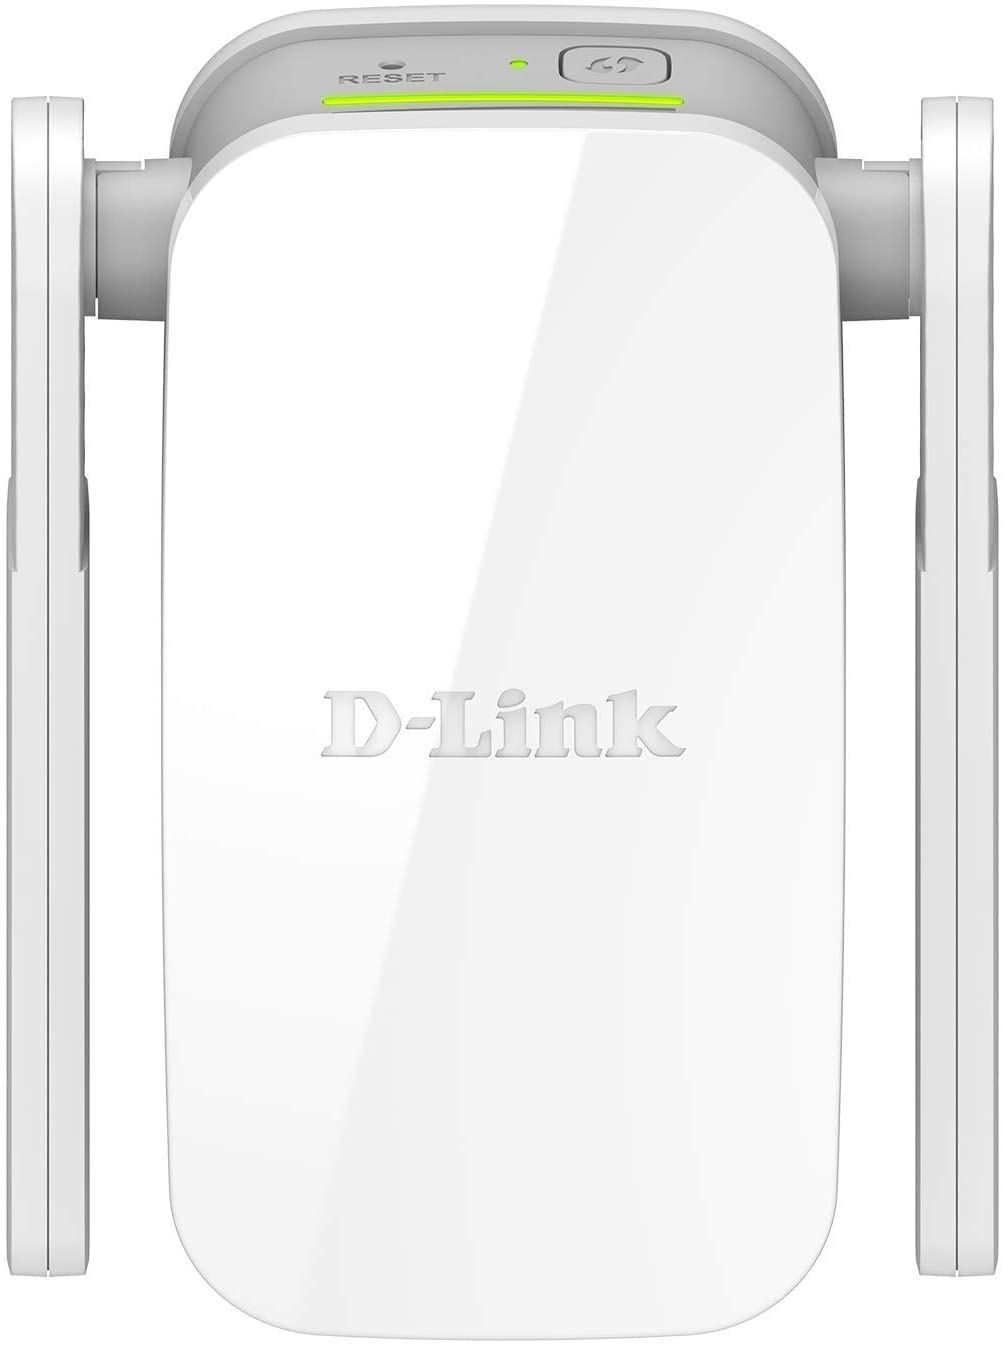 D-Link AC1200 Dual-Band Wi-Fi Range Extender antenna down